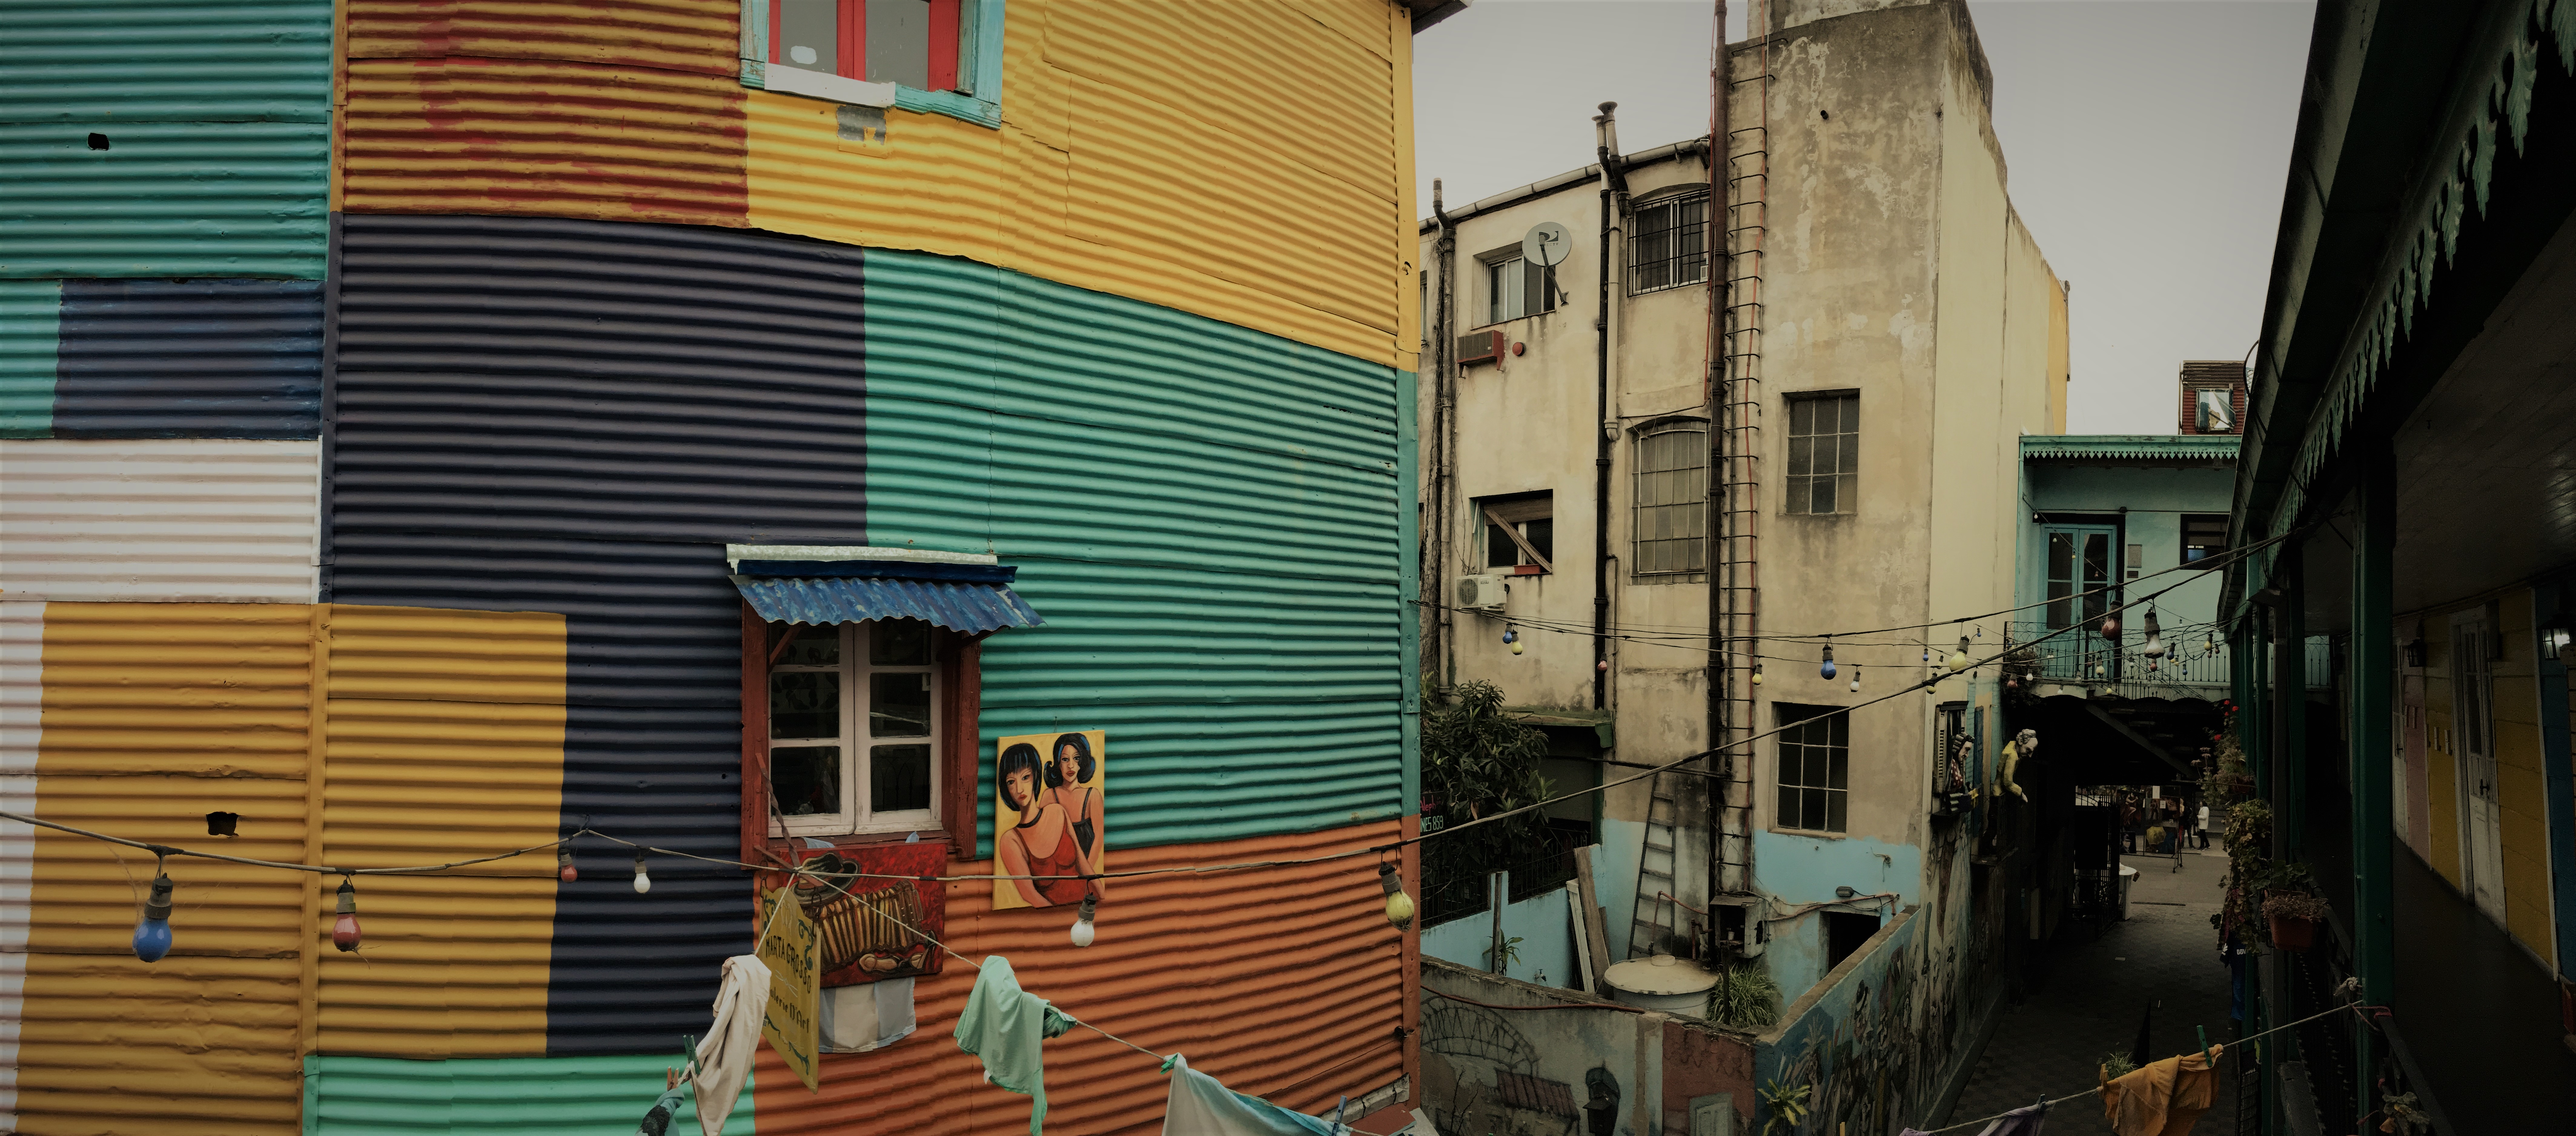 La Boca: the Expressive Heart of Buenos Aires